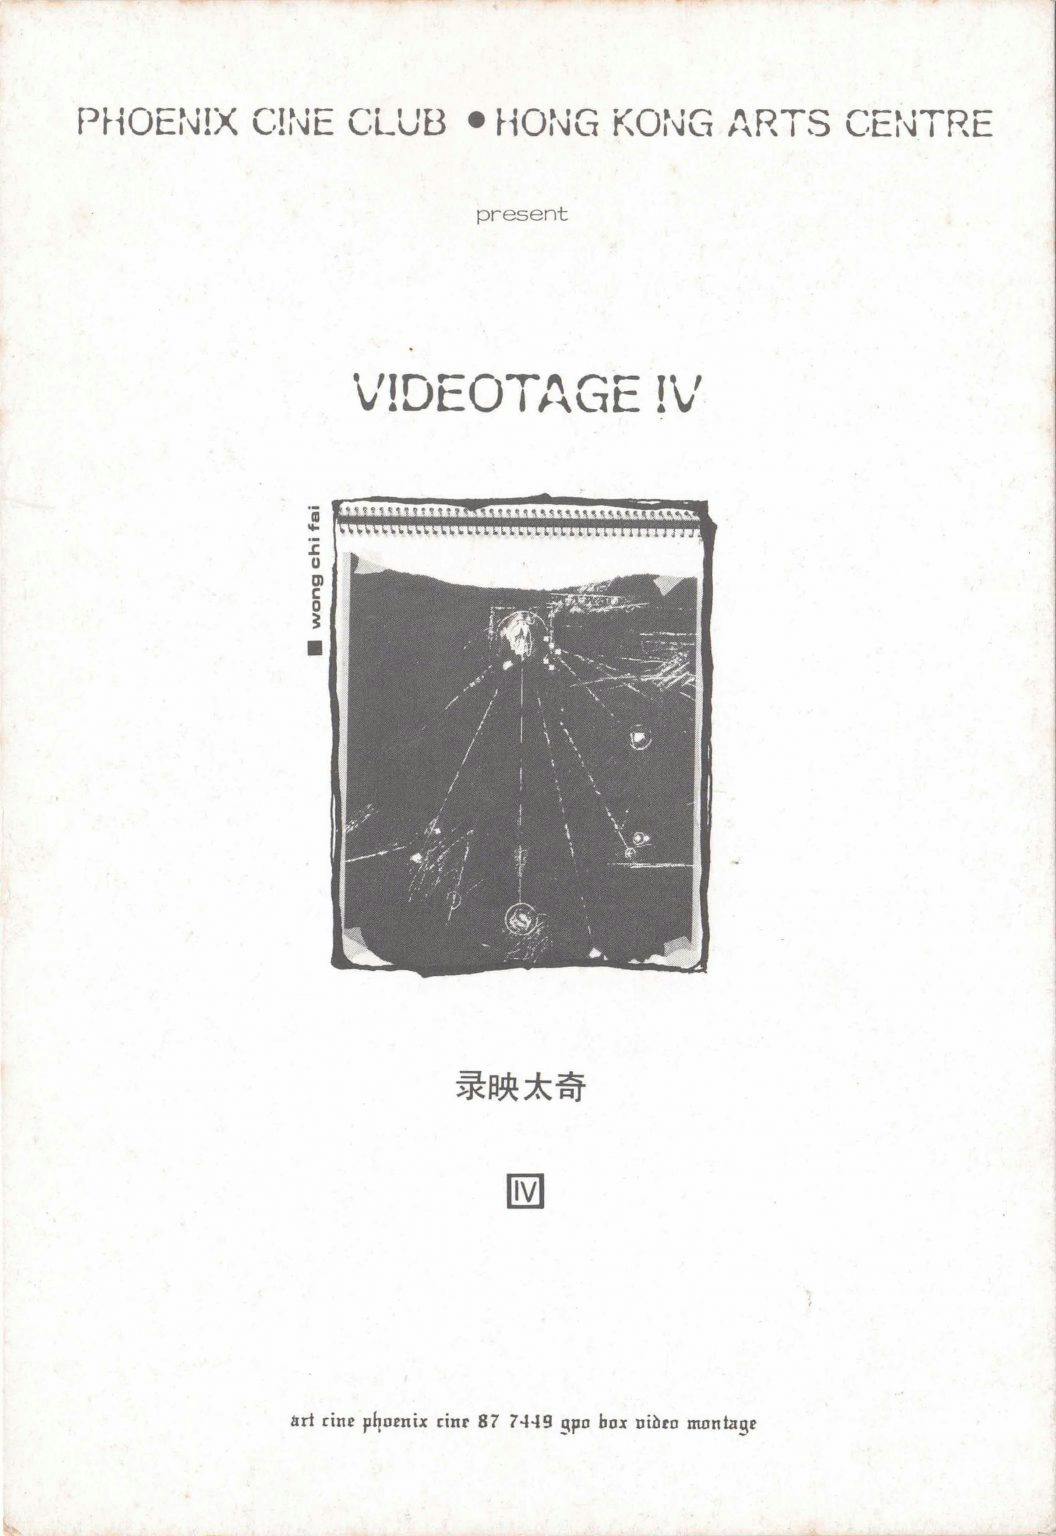 Videotage IV – Postcard (2) 錄影太奇 IV – 明信片 (2)